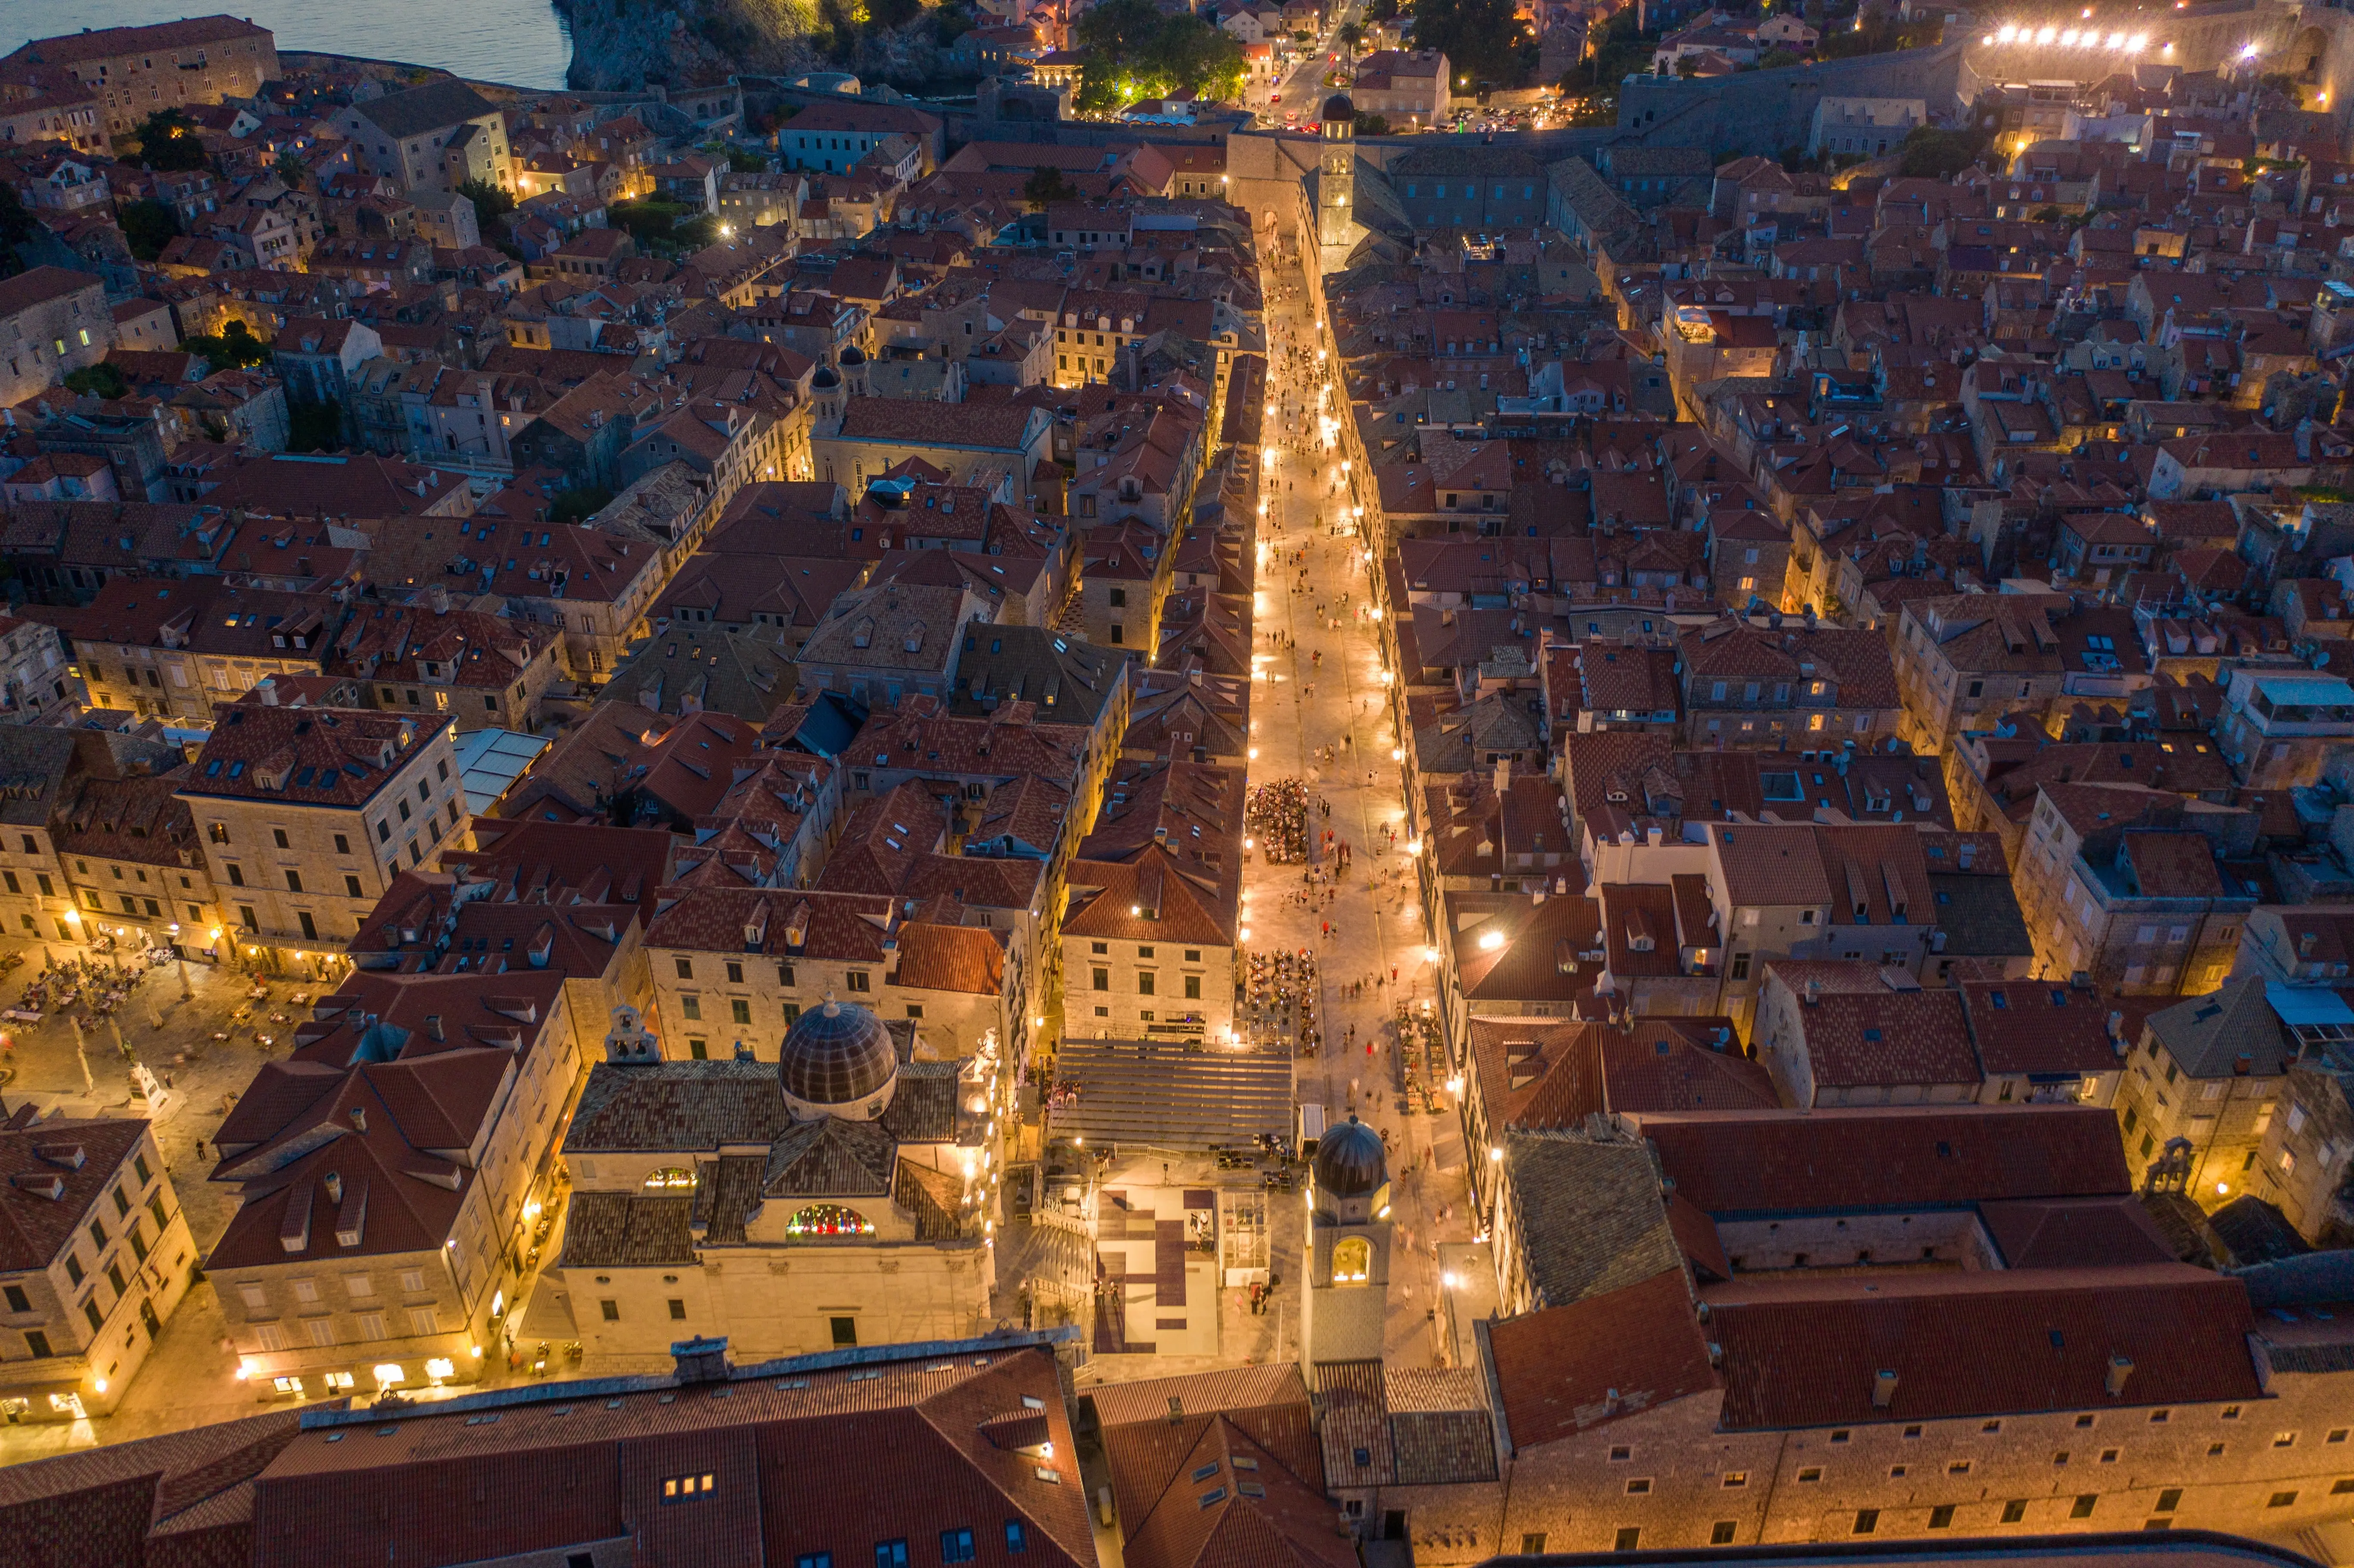 Dubrovnik - Slano